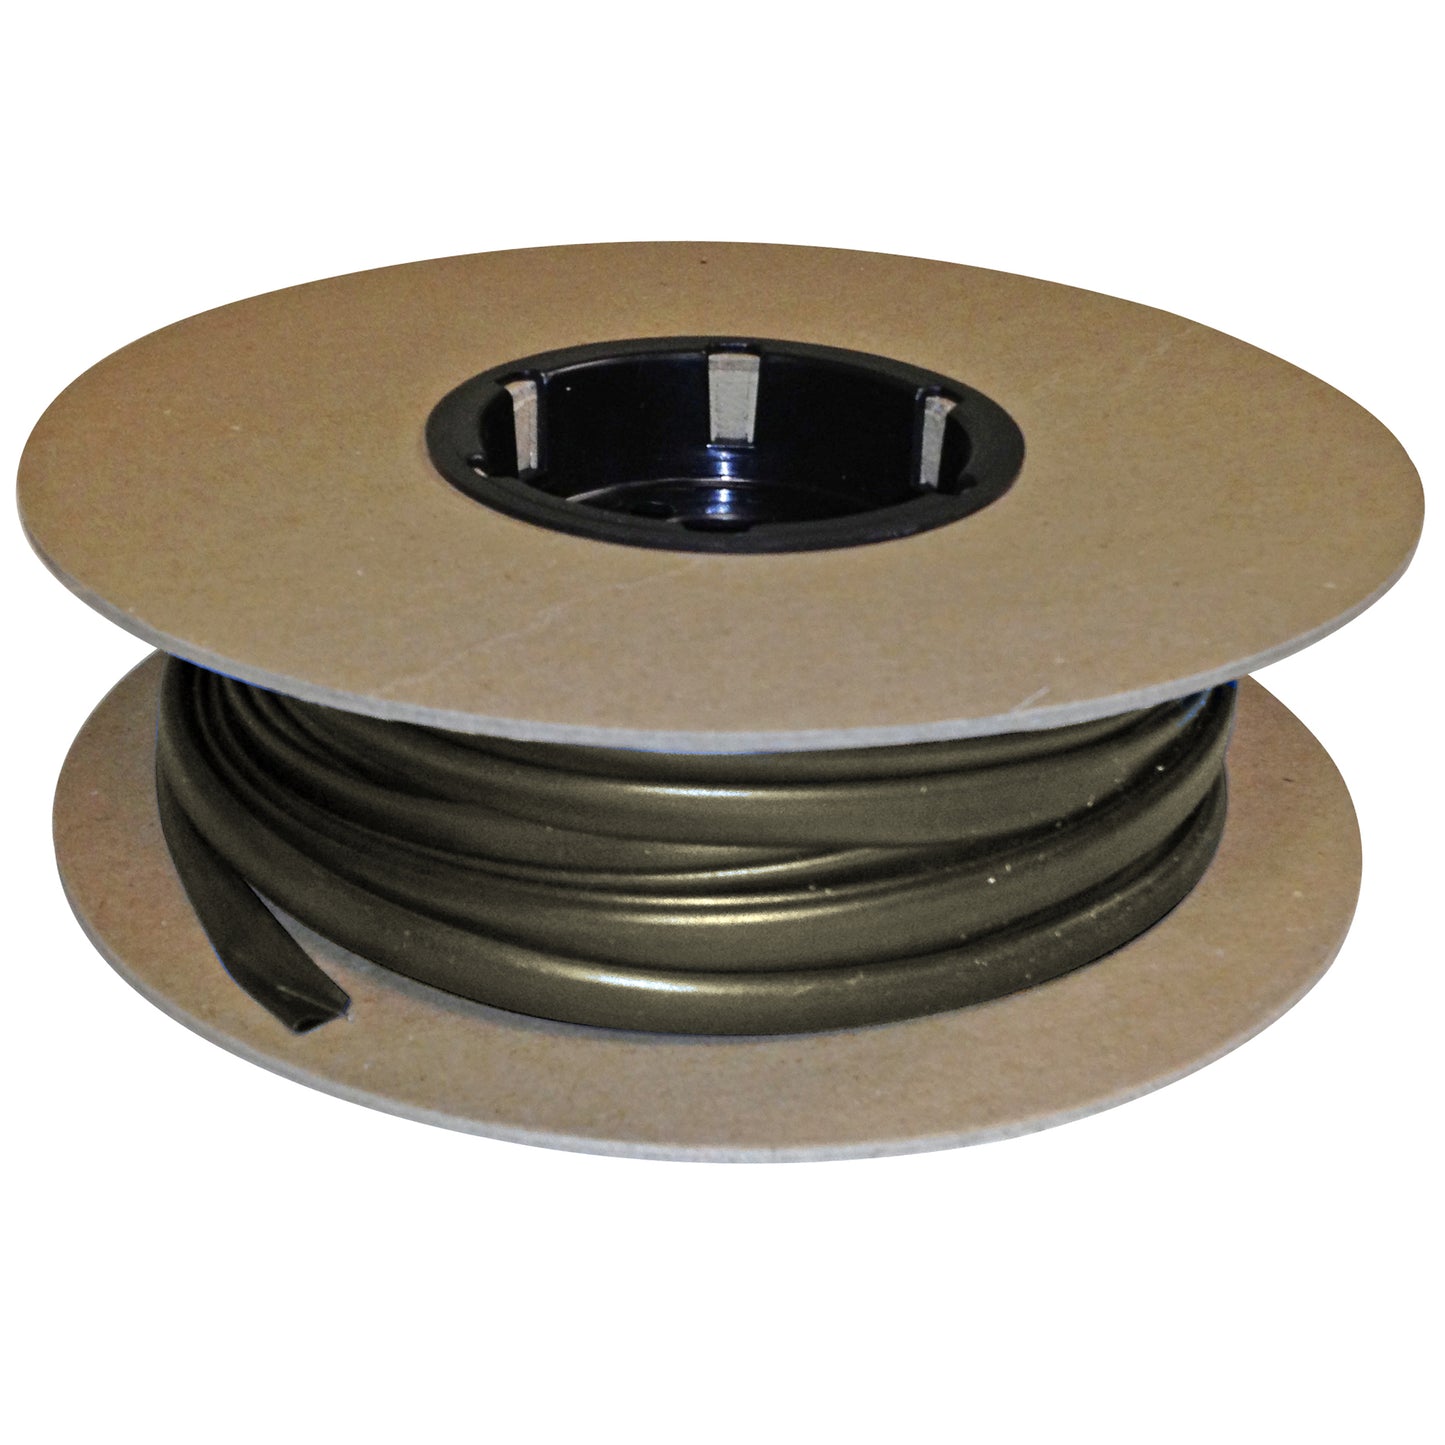 Flexible Thin Single Wall Non-Adhesive Heat Shrink Tubing 2:1 Black 3/32" ID - 25' Ft Spool